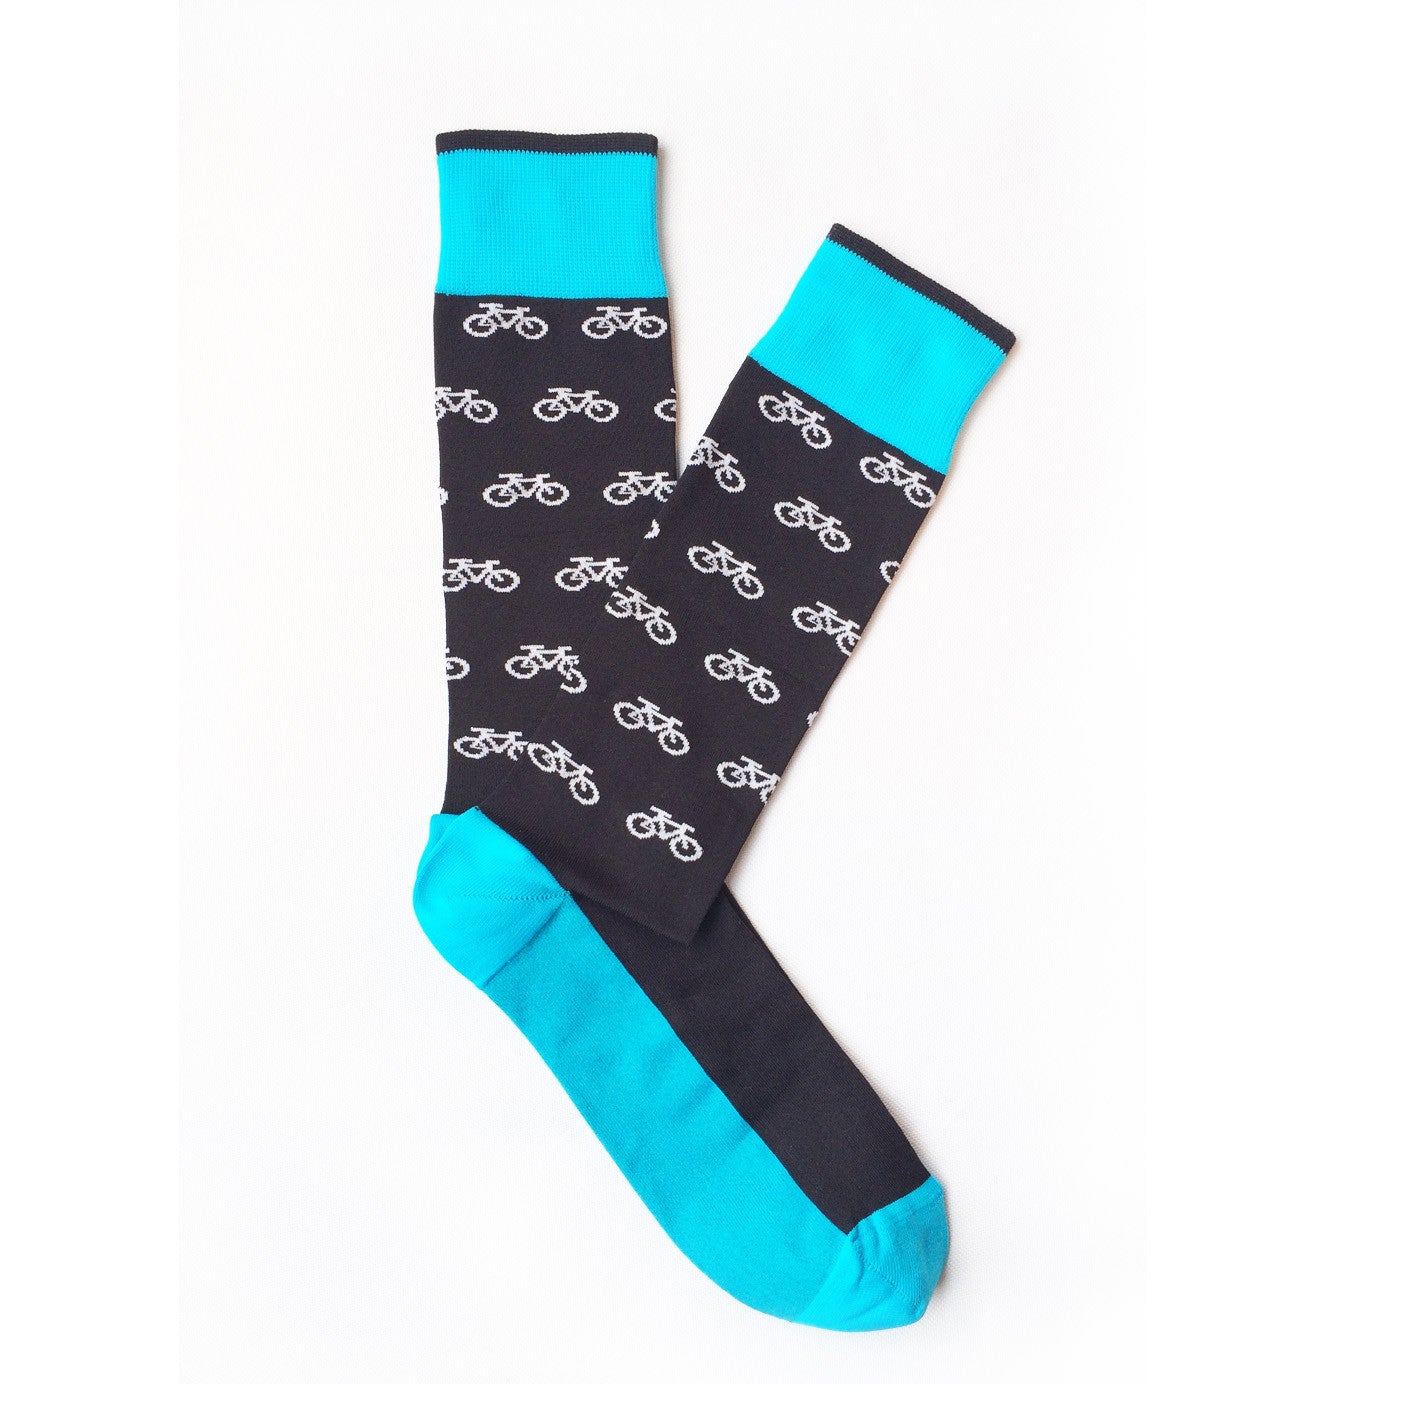 Giraffecool-Giraffe-Cool-Brand-Black-Blue-And-White-Bicycle-Bike-Microfiber-Fashion-Socks-Pair-Open